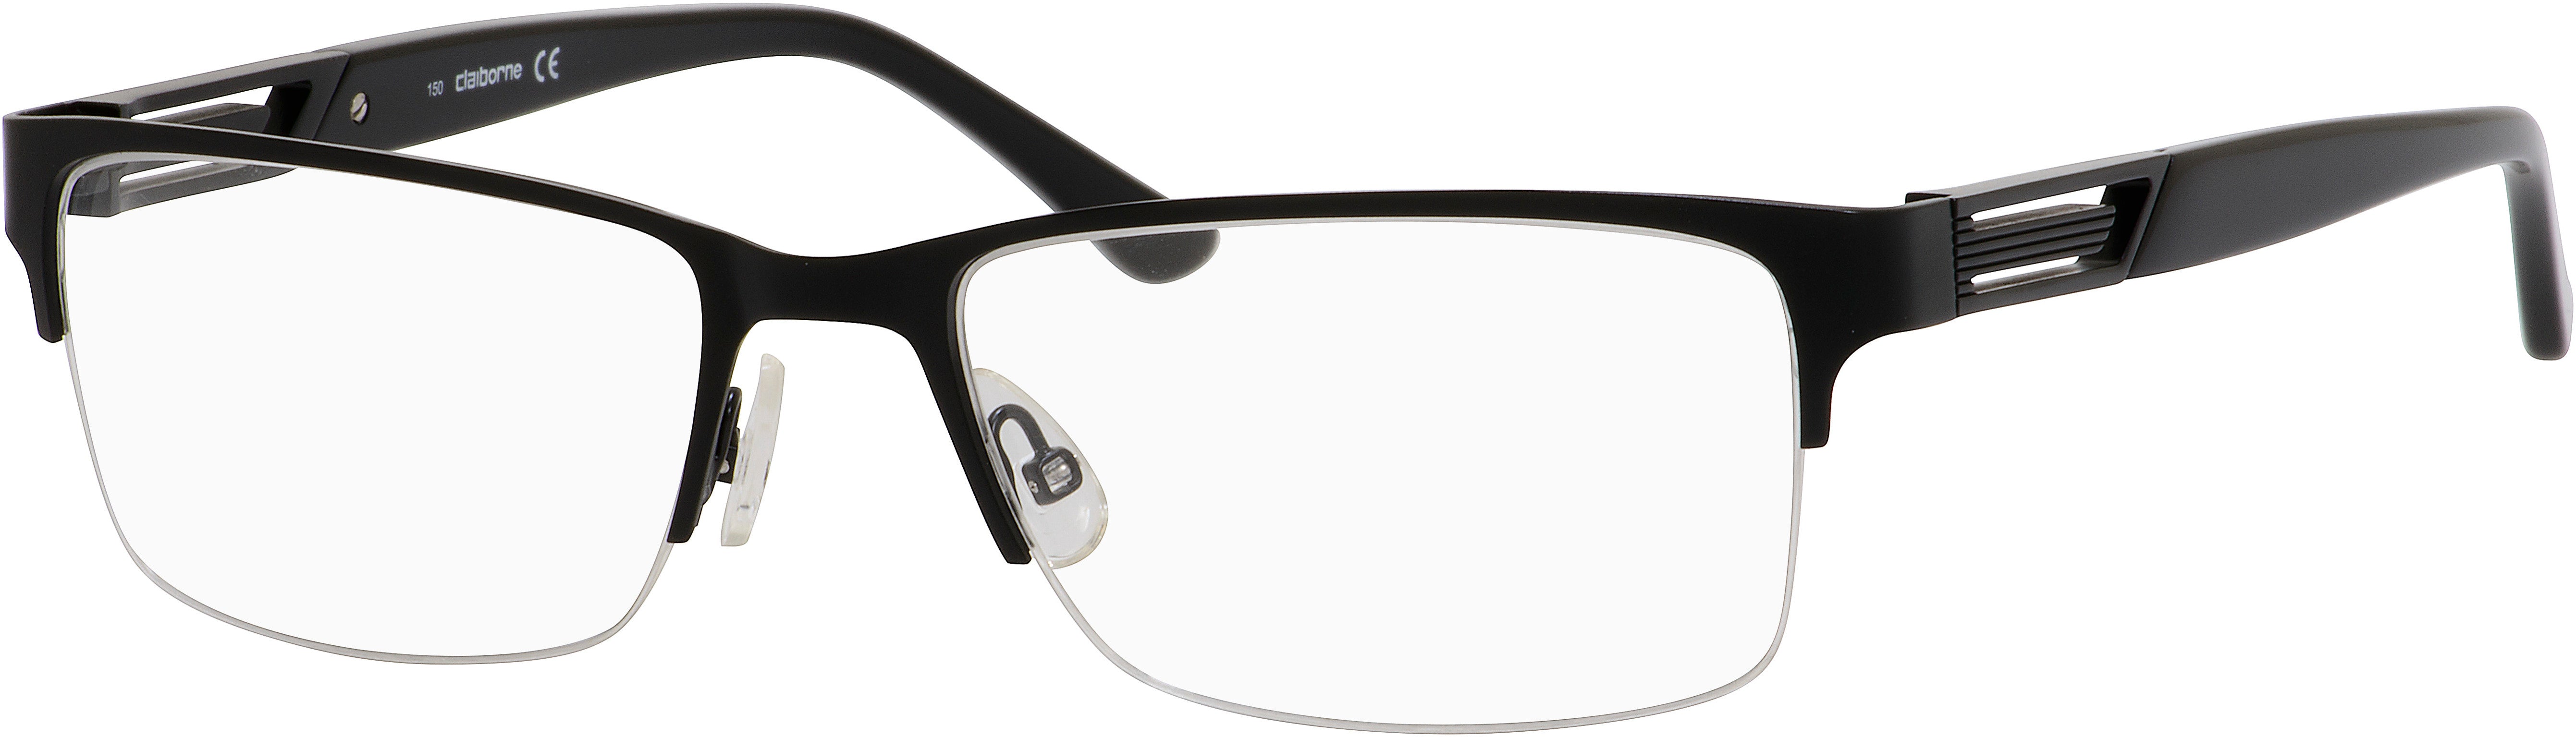  Claiborne 226 Rectangular Eyeglasses 0003-0003  Black (00 Demo Lens)